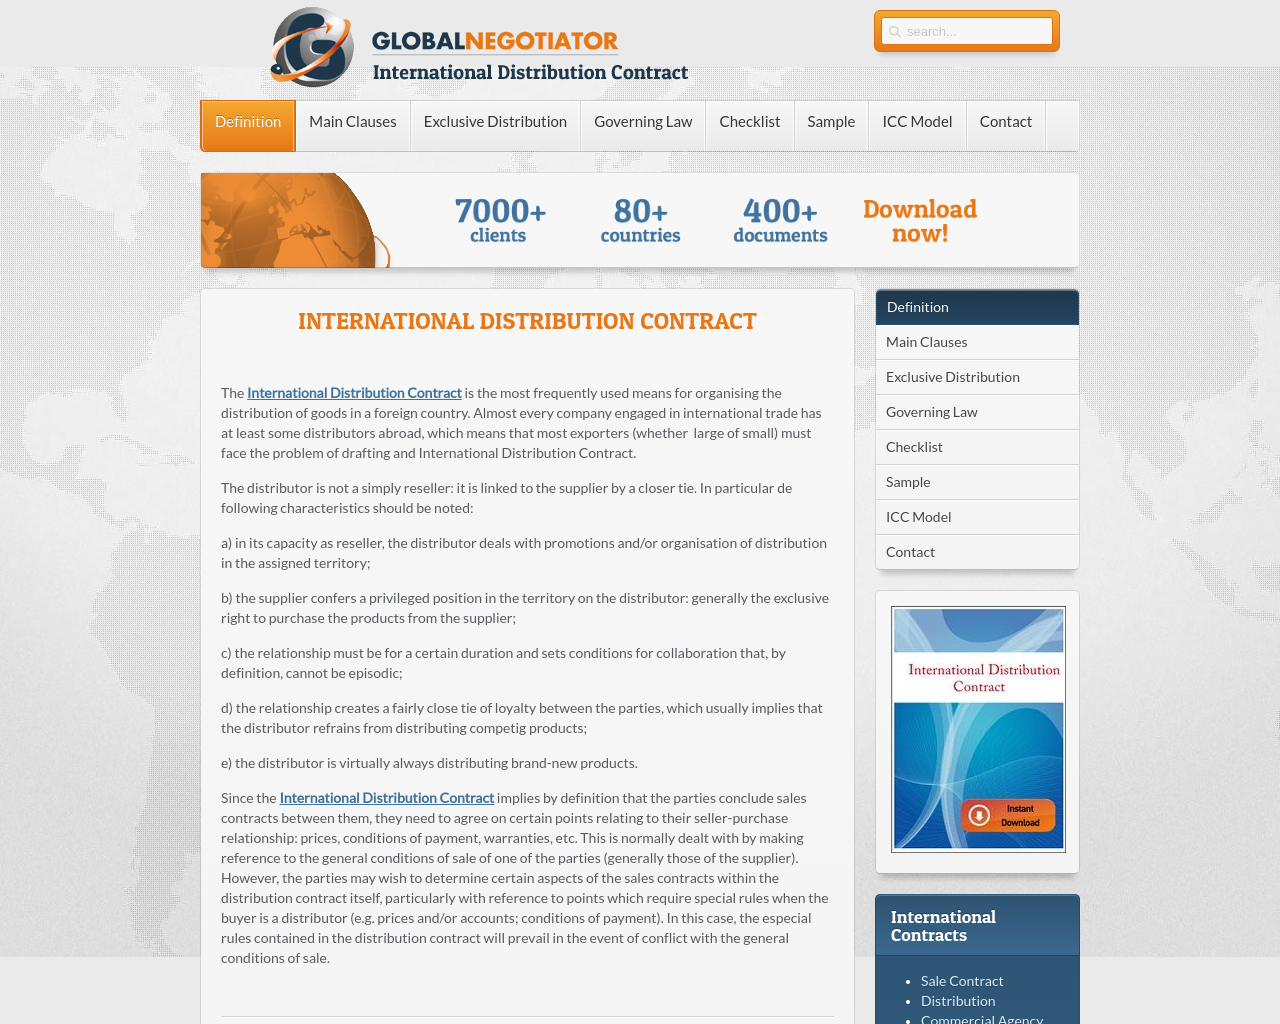 internationaldistributioncontract.com